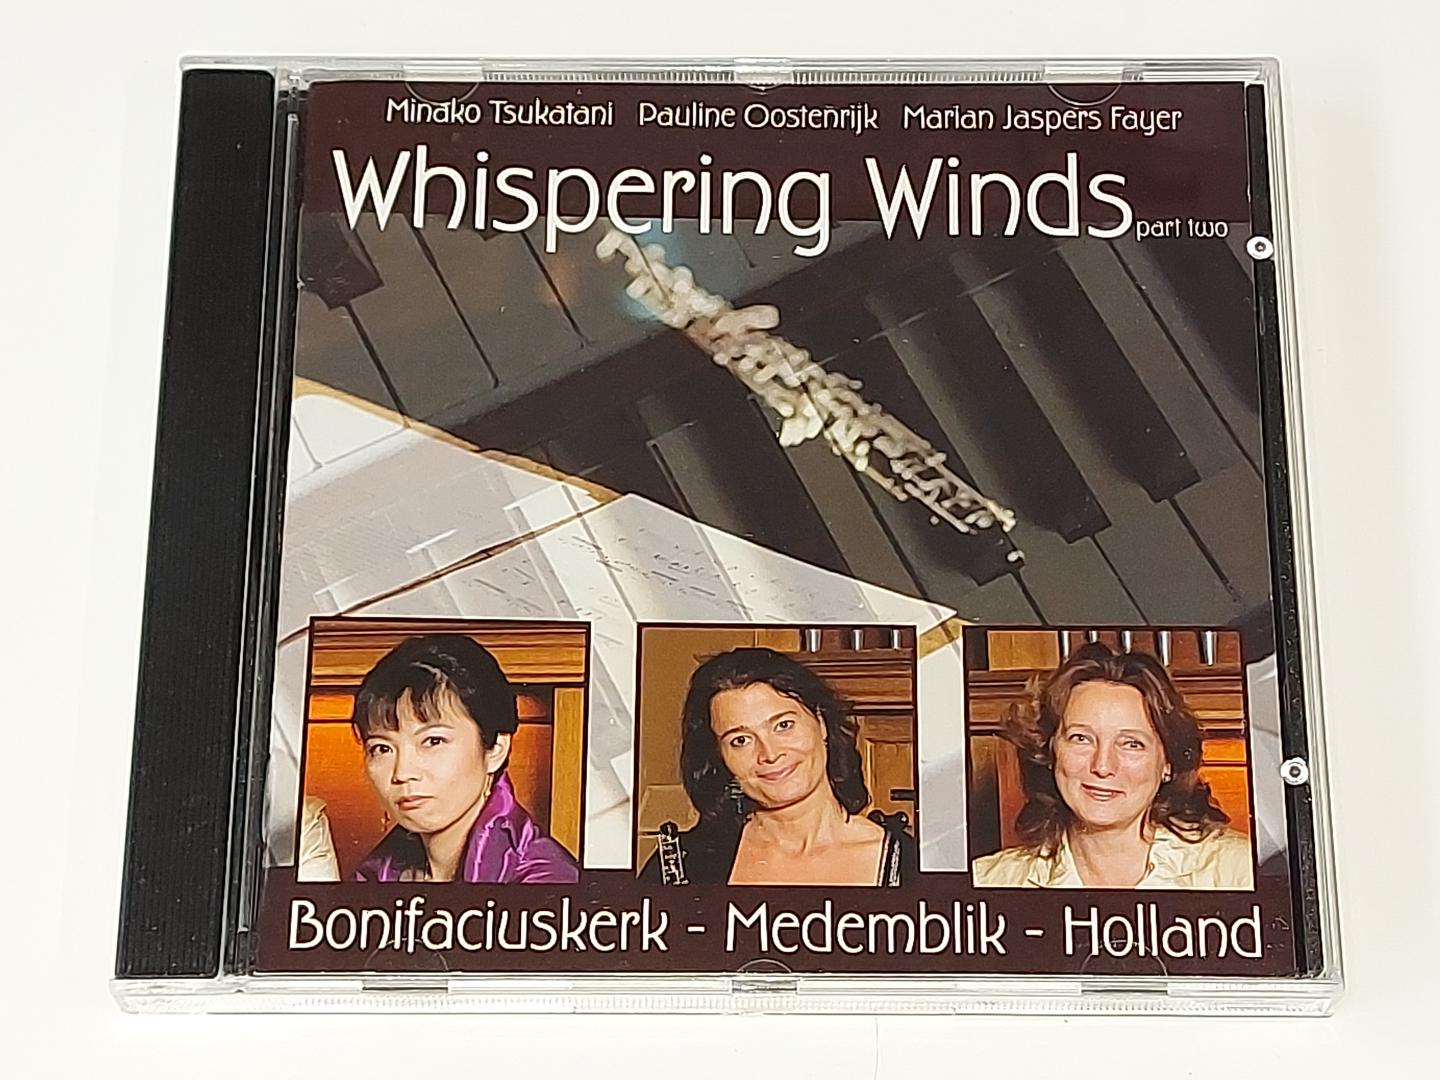 Tsukatani / Oostenrijk / Jaspers Fayer - Whispering Winds. Bonifaciuskerk Medemblik